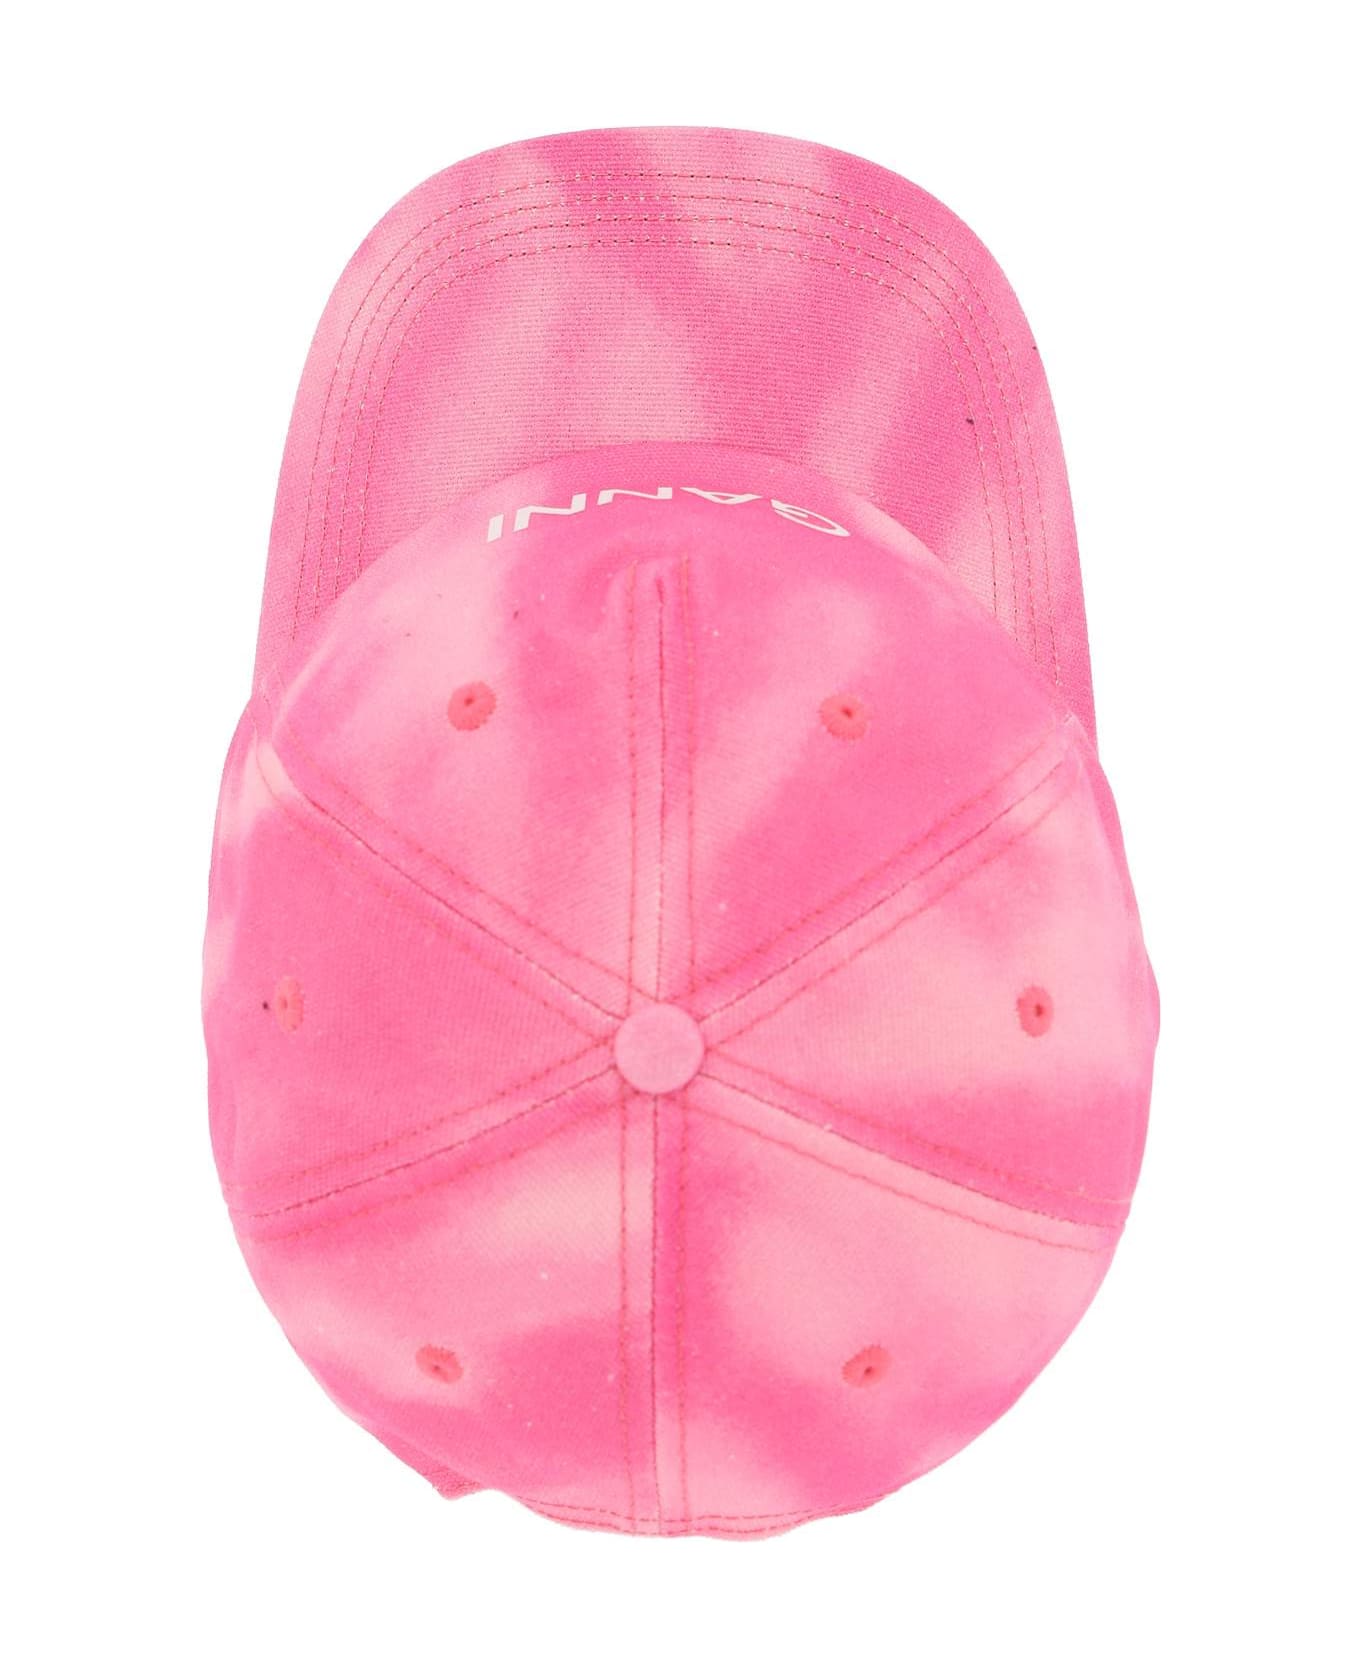 Ganni Logoed Baseball Cap - DREAMY DAZE PHLOX PINK (Pink)